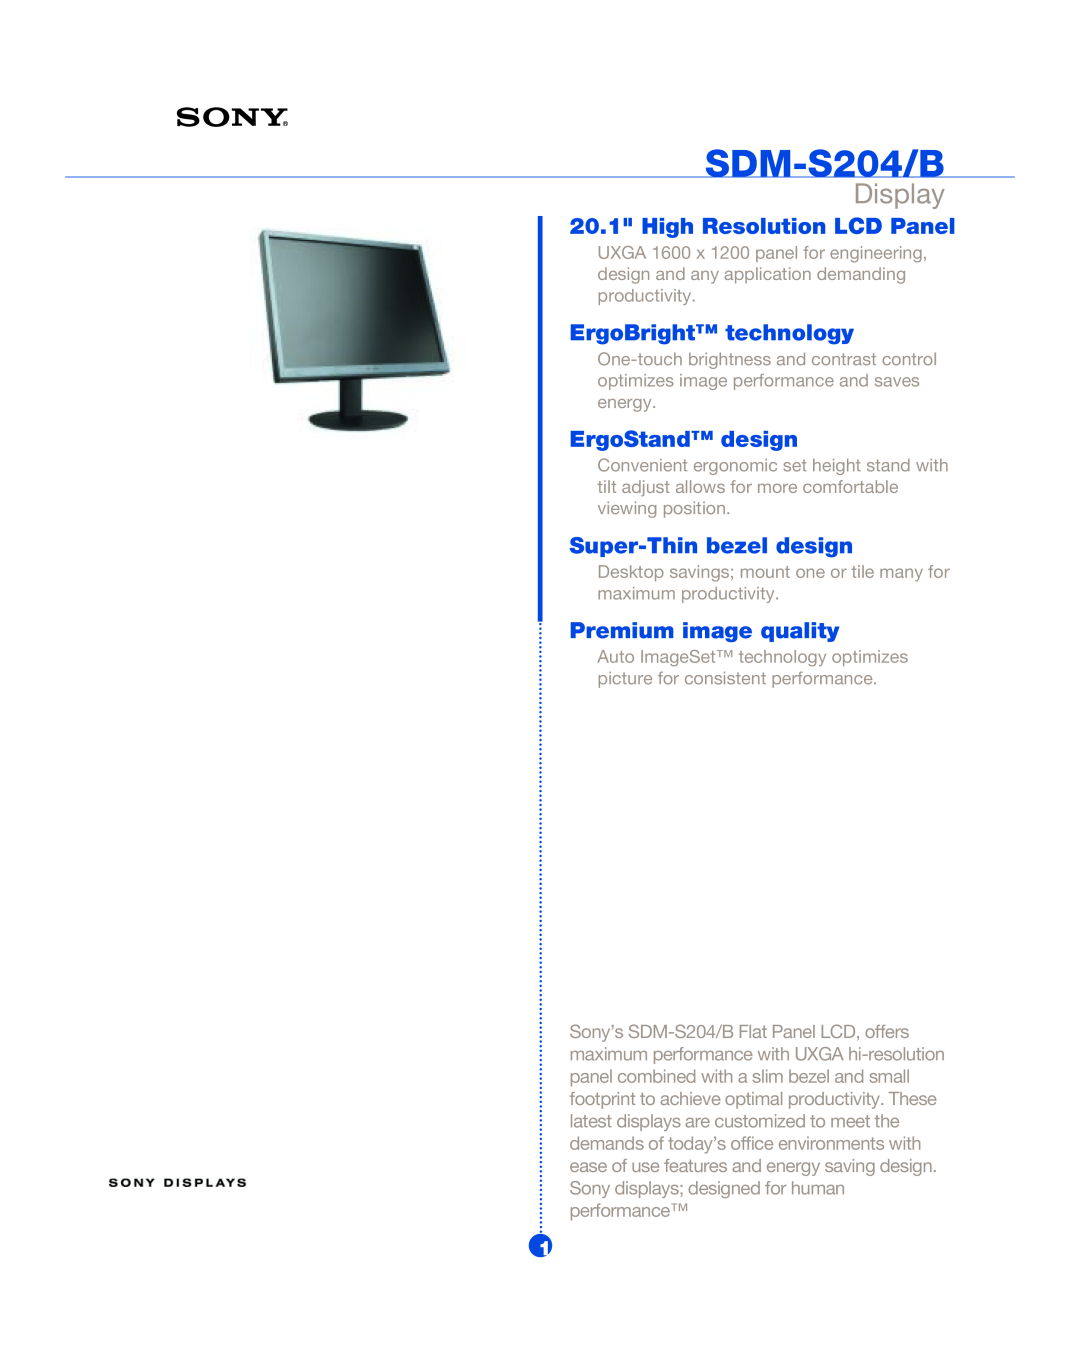 Sony SDM-S204/B manual Display, High Resolution LCD Panel, ErgoBright technology, ErgoStand design, Premium image quality 